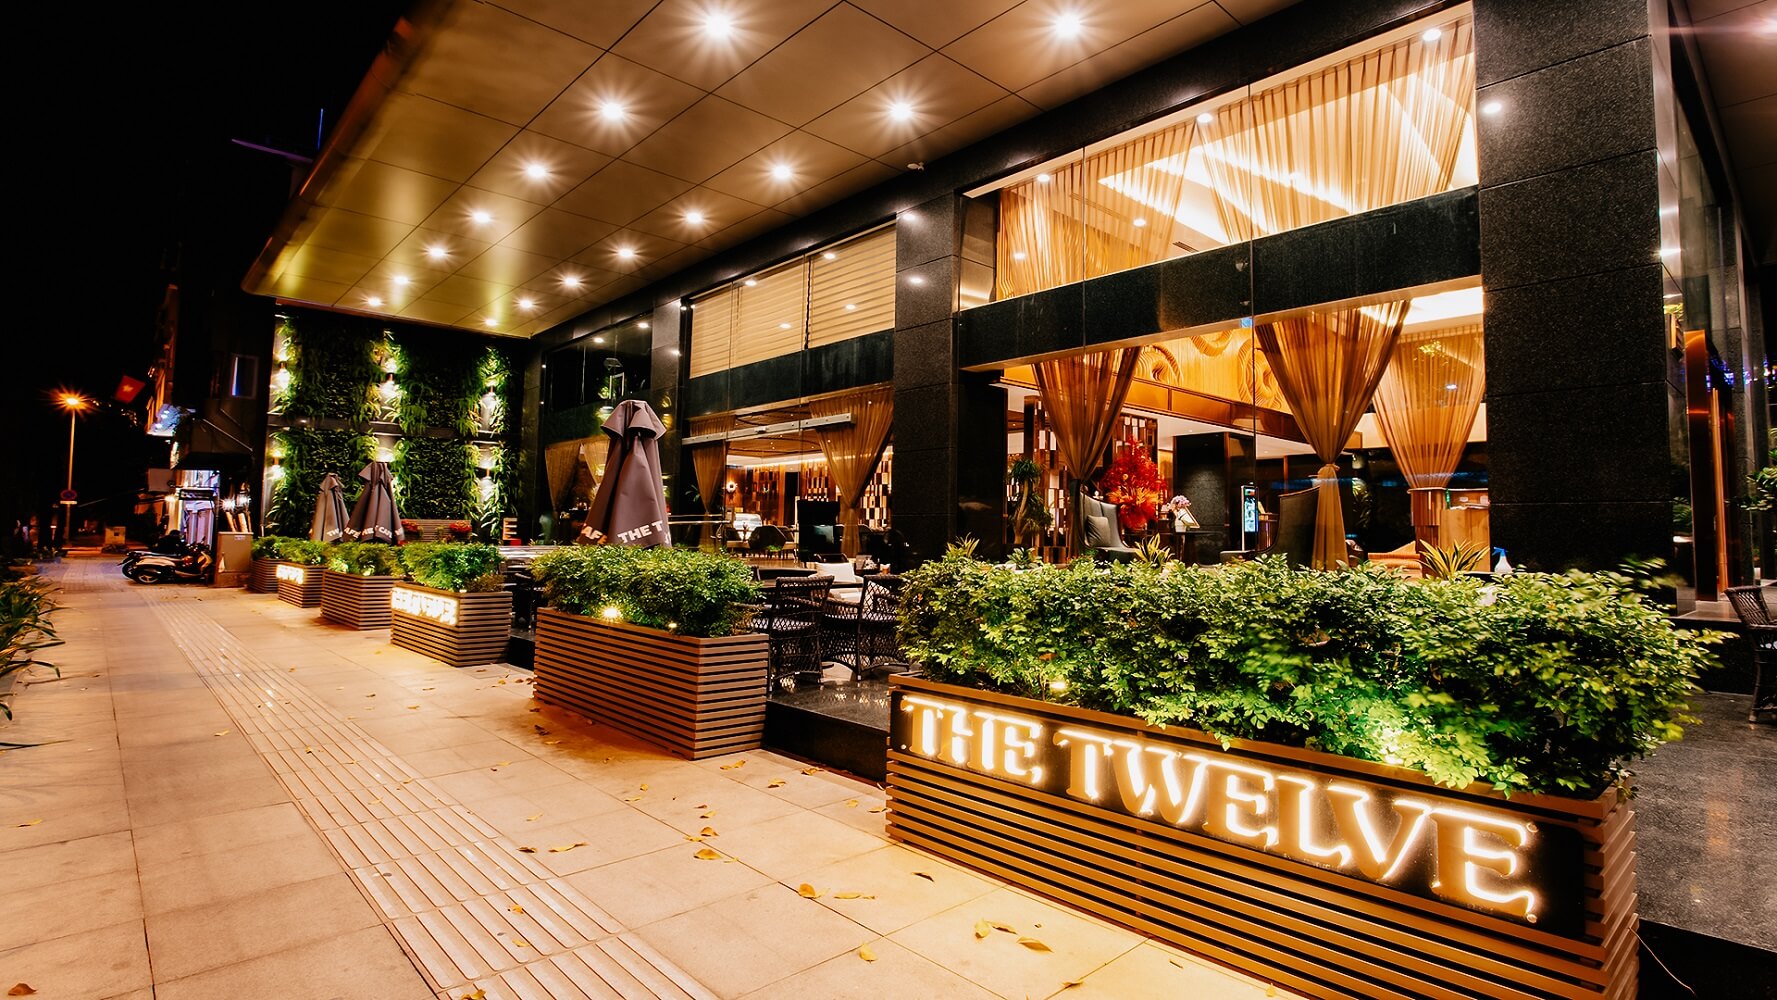 The Twelve Cafe